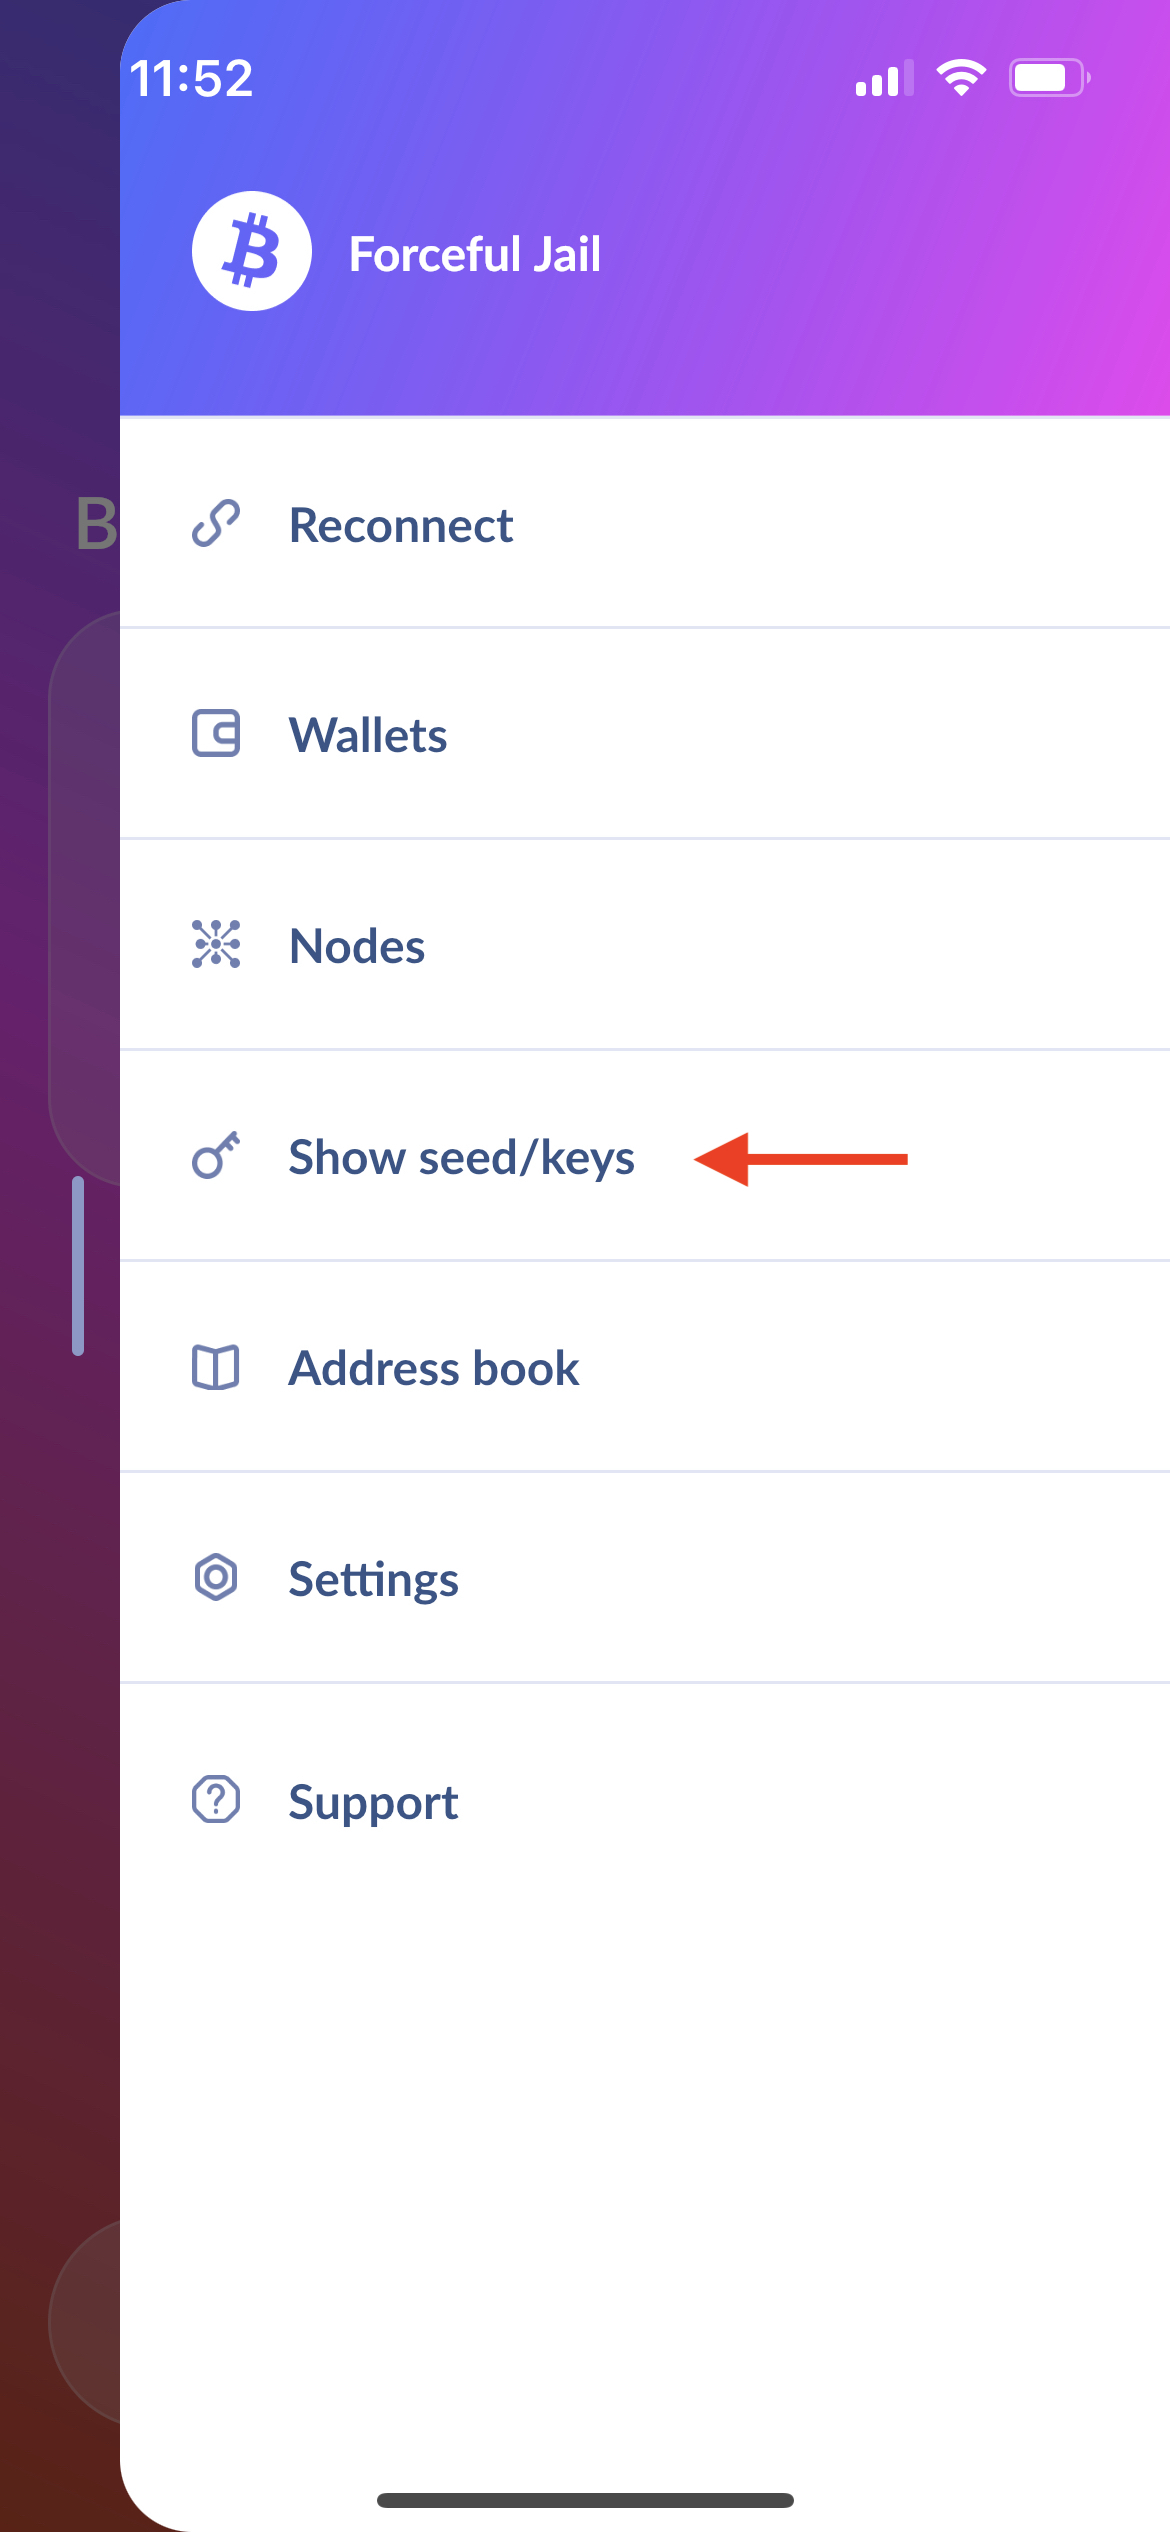 Click "Show seed/keys"